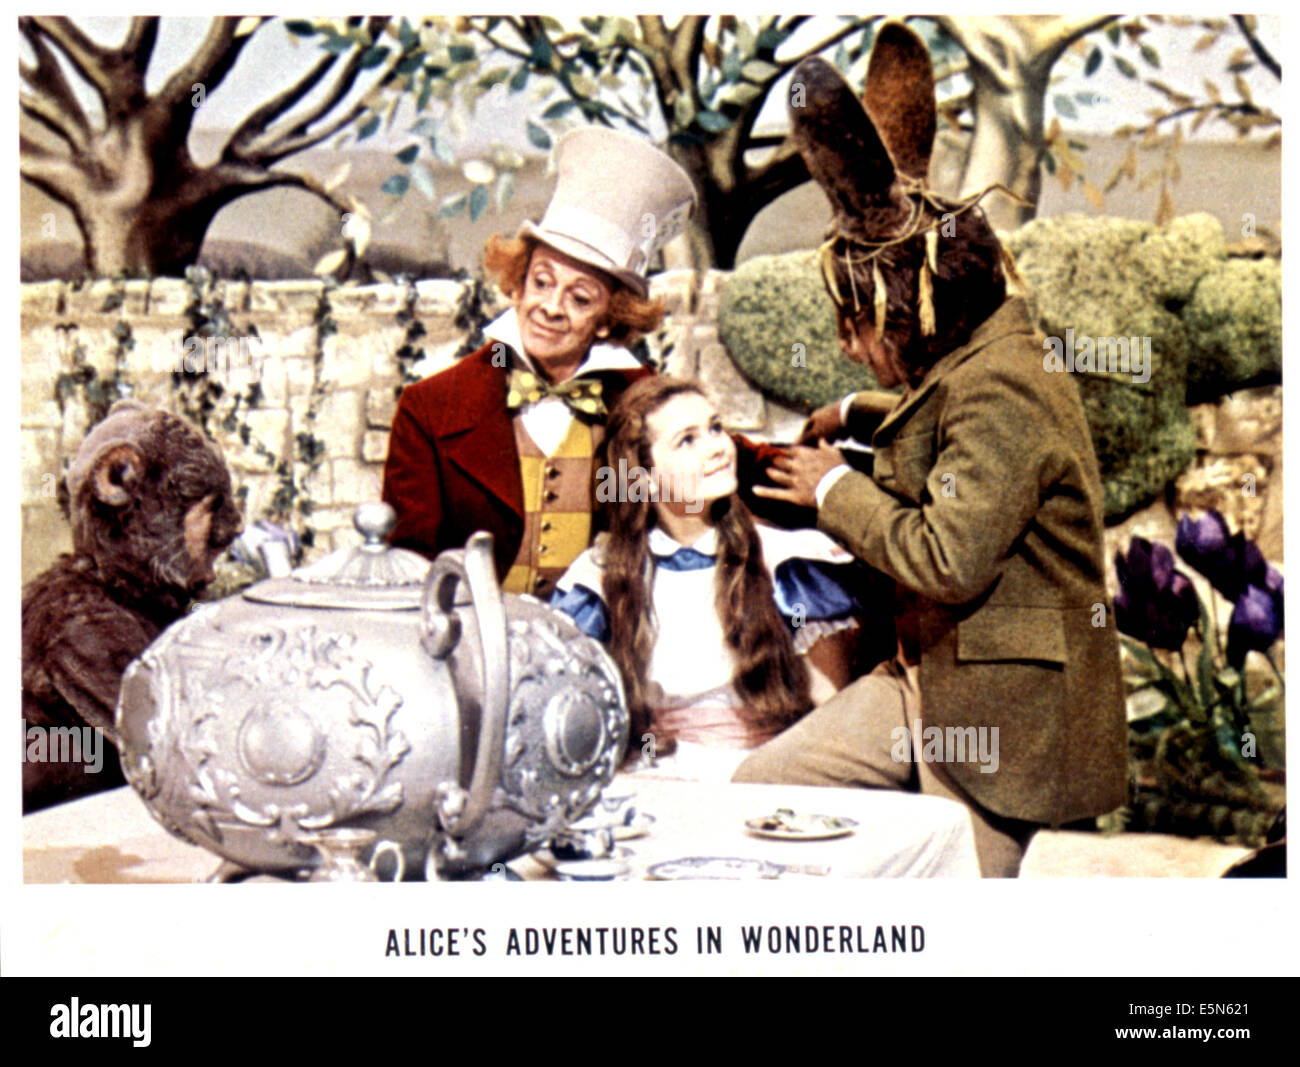 ALICE'S ADVENTURES IN WONDERLAND, Davy Kaye, Robert Helpmann, Fiona Fullerton, Peter Sellers, 1972 Stock Photo